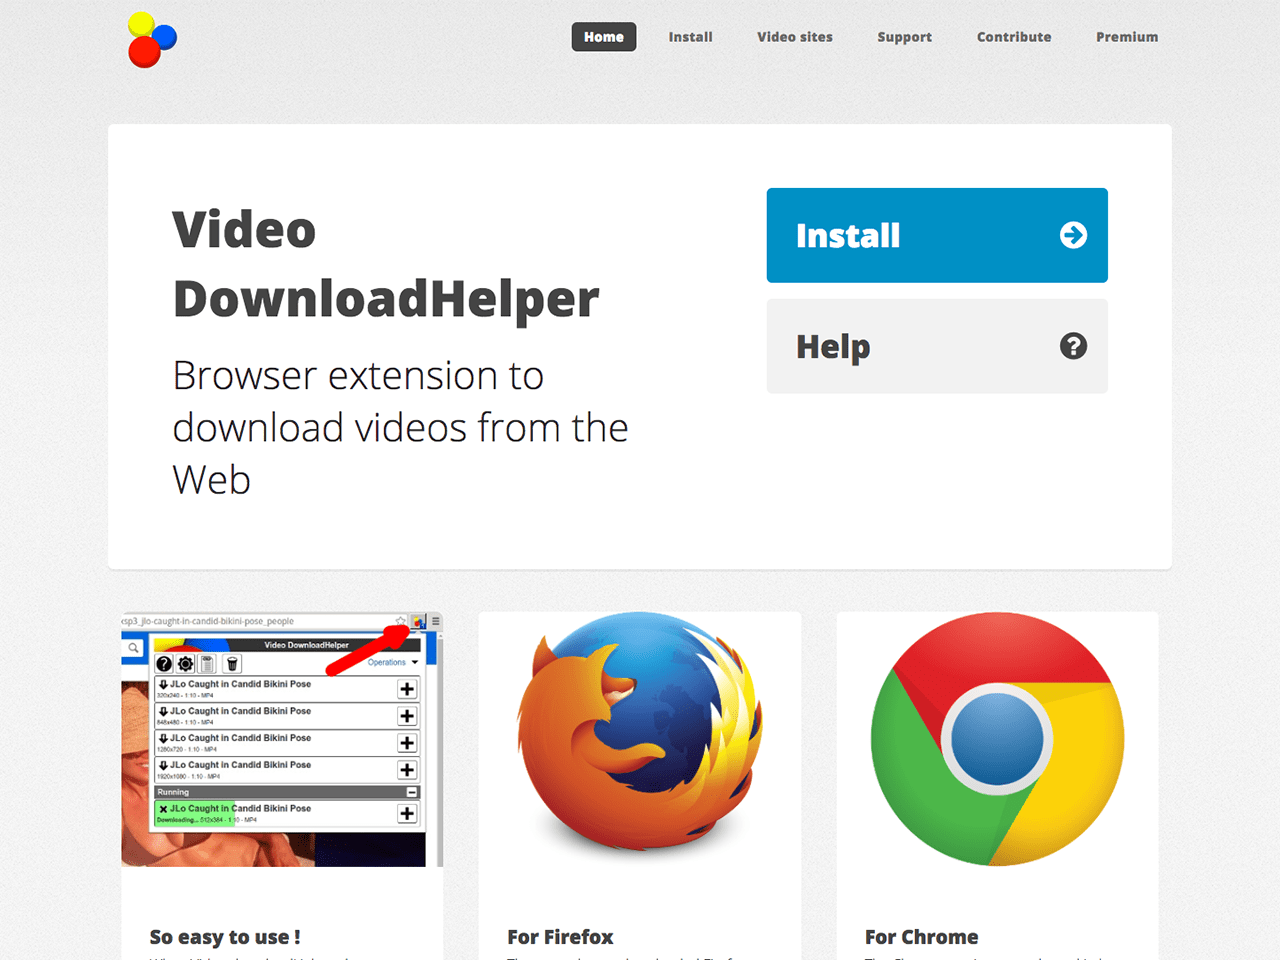 videodowloader helper